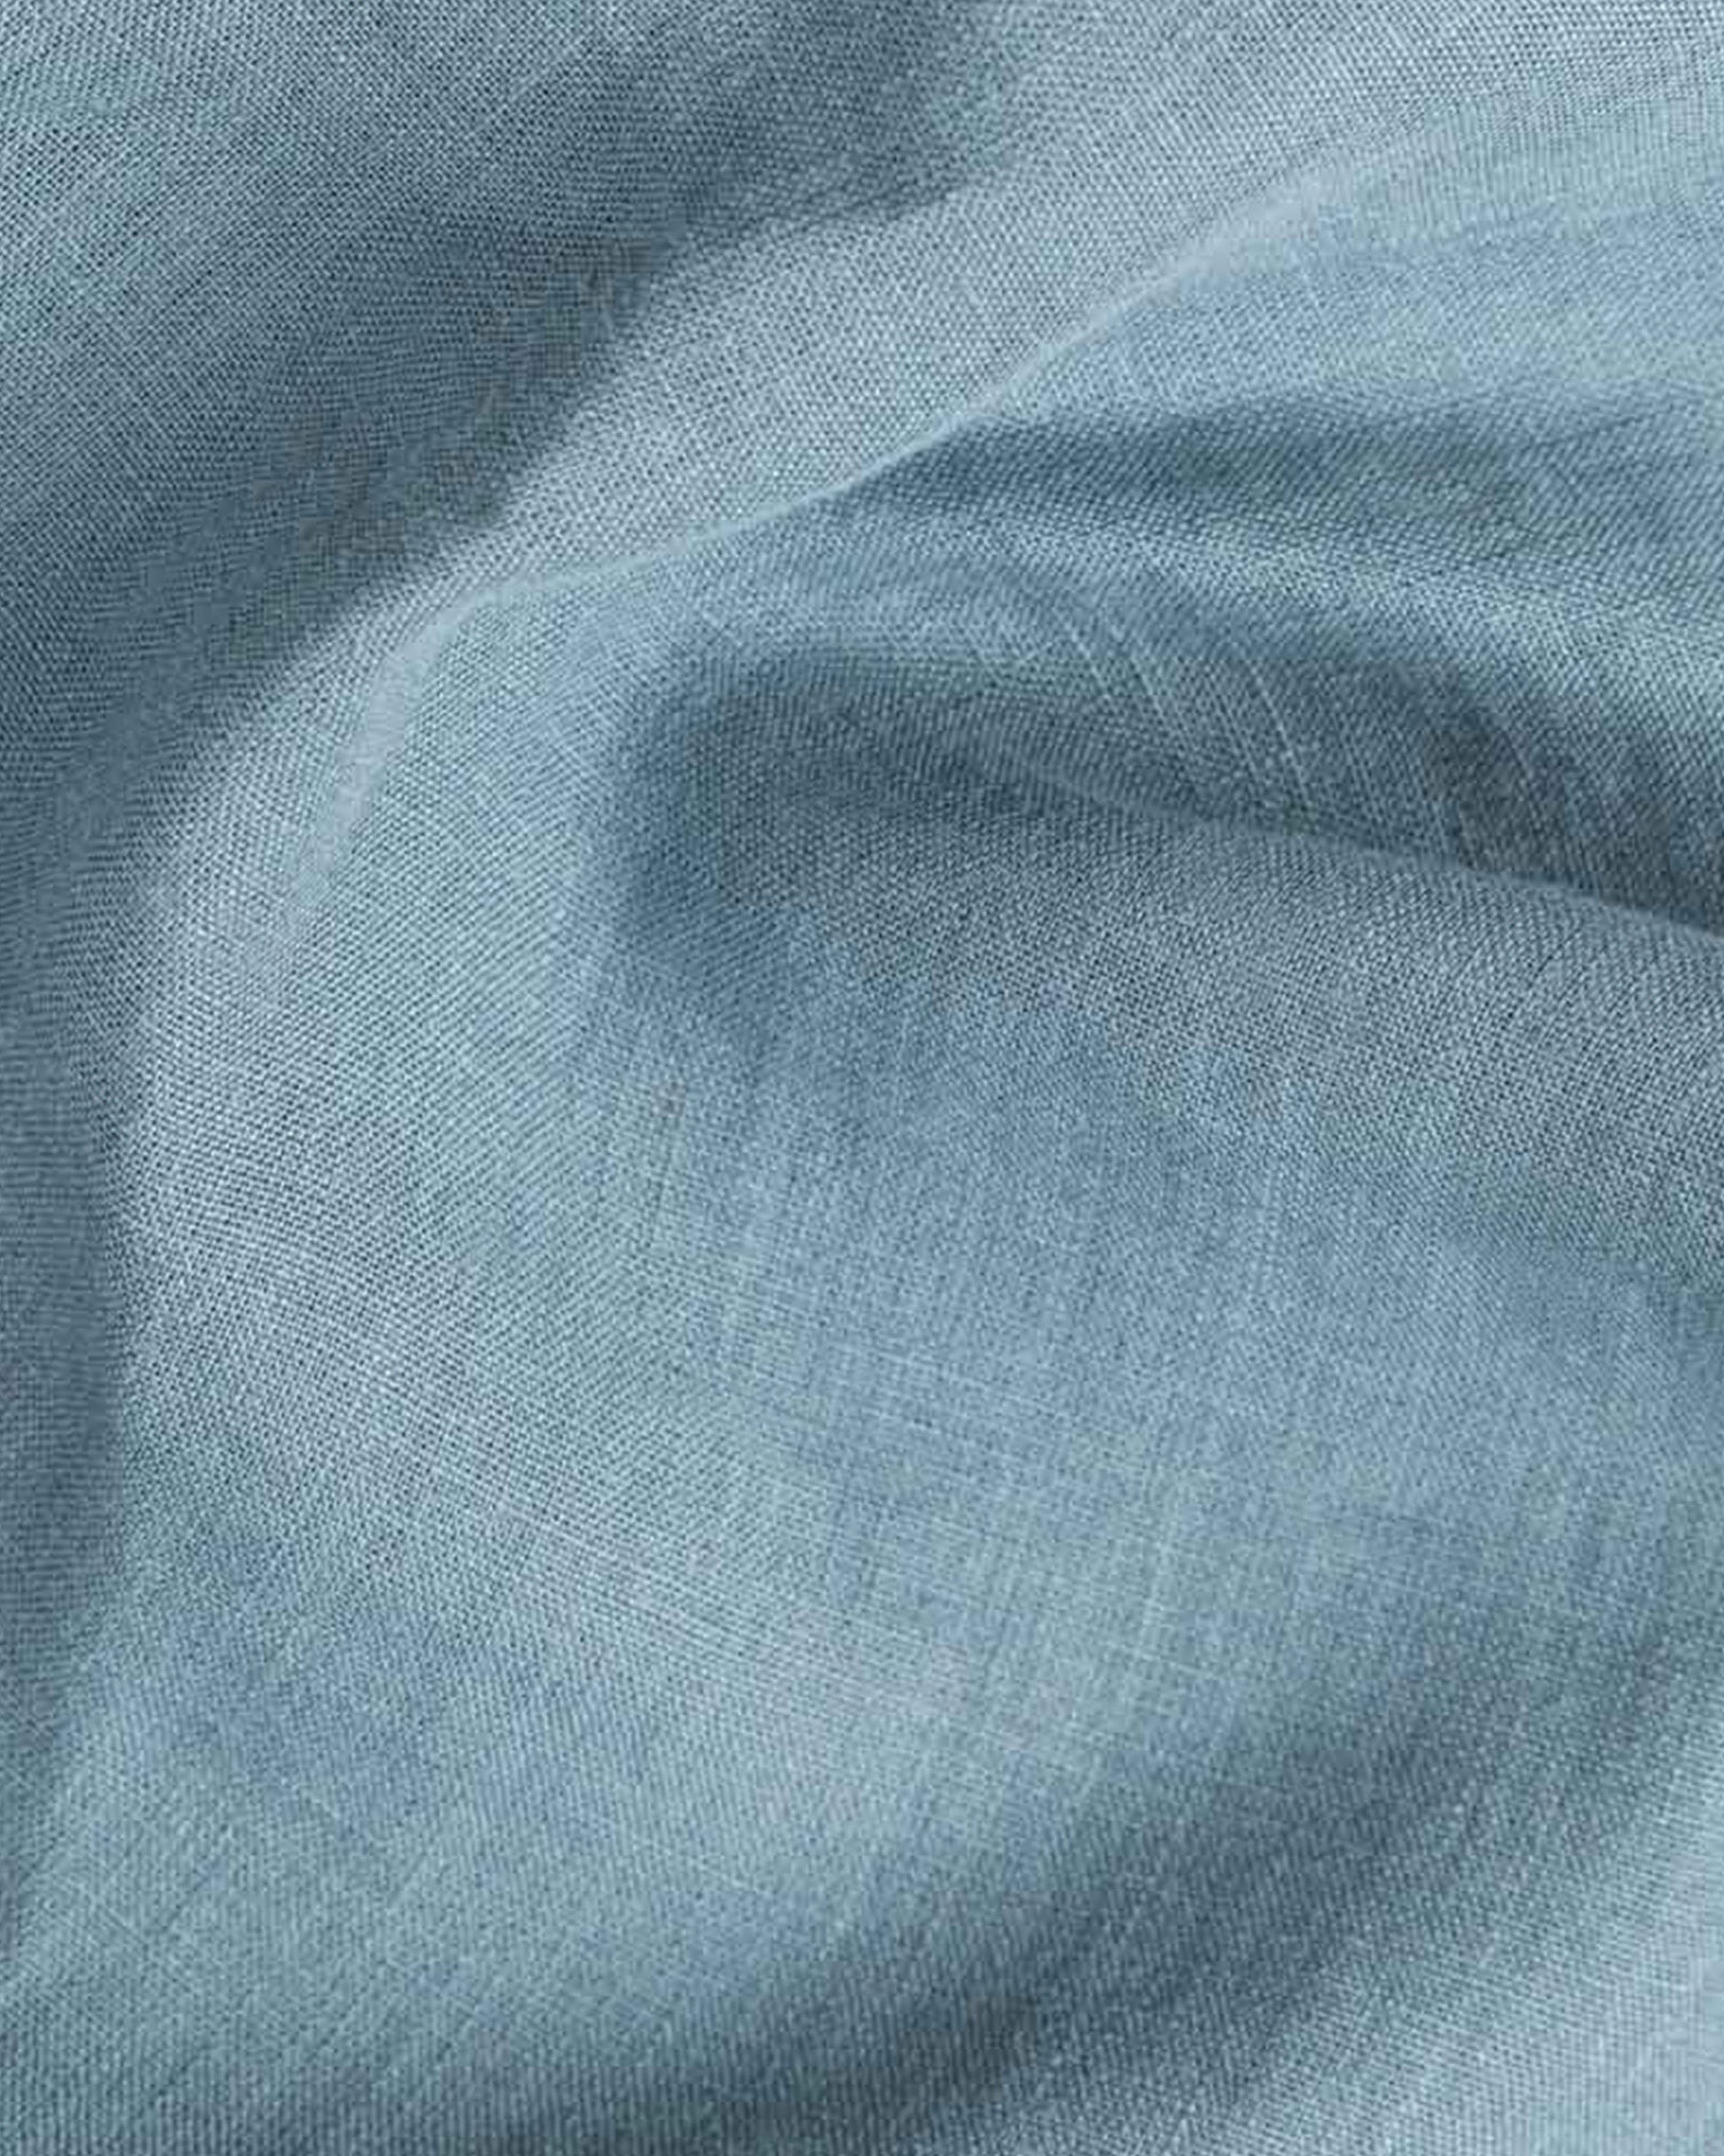 Custom size Gray blue linen duvet cover - MagicLinen